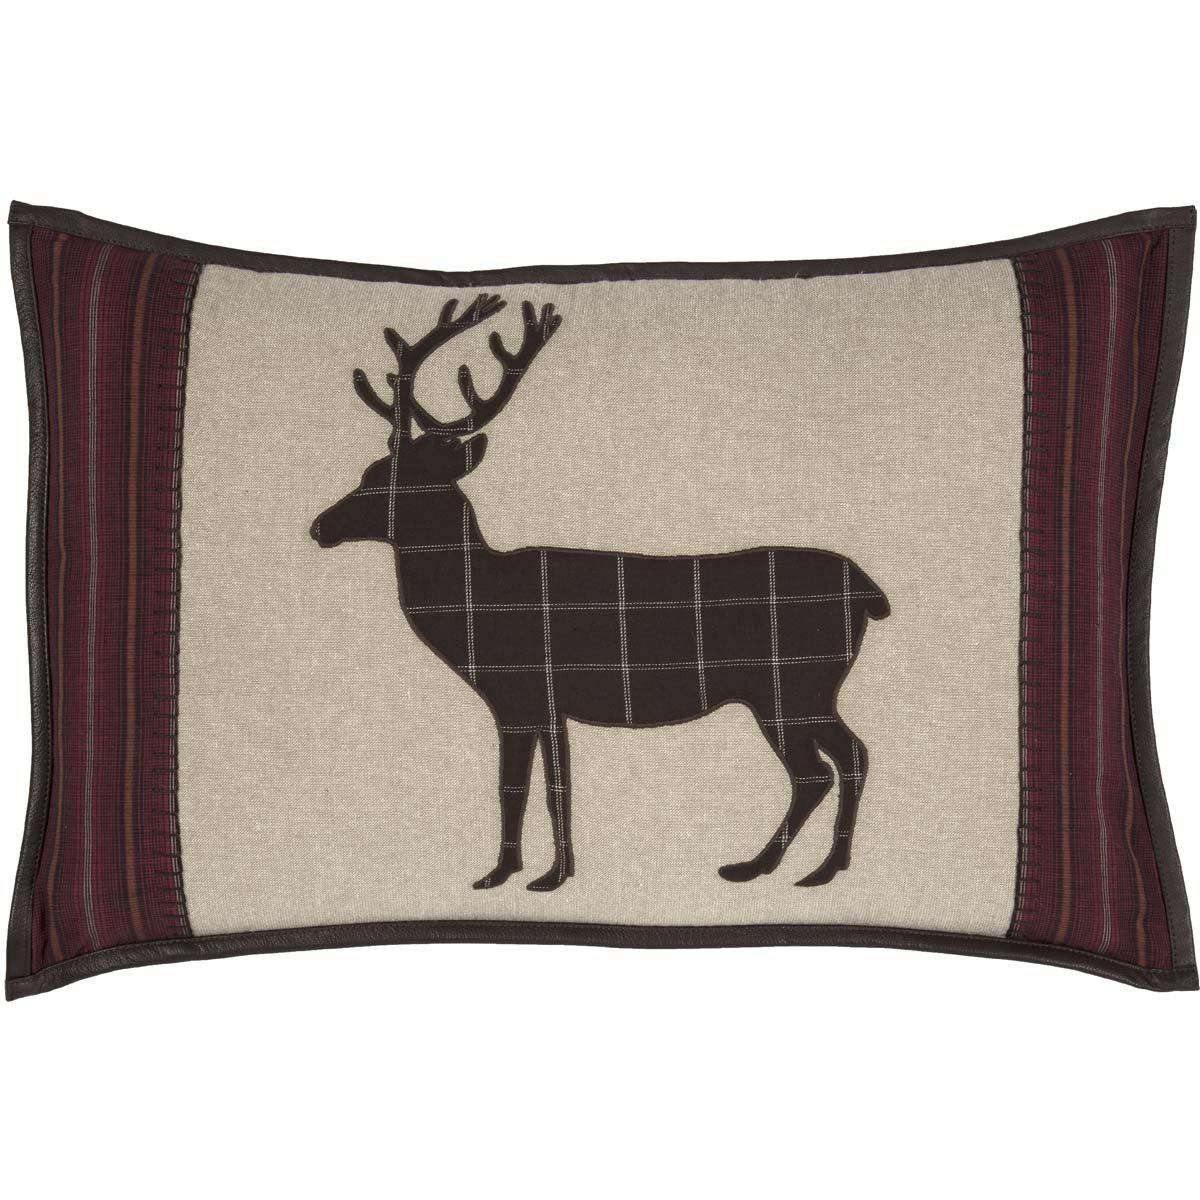 Wyatt Deer Applique Pillow 14x22 VHC Brands front